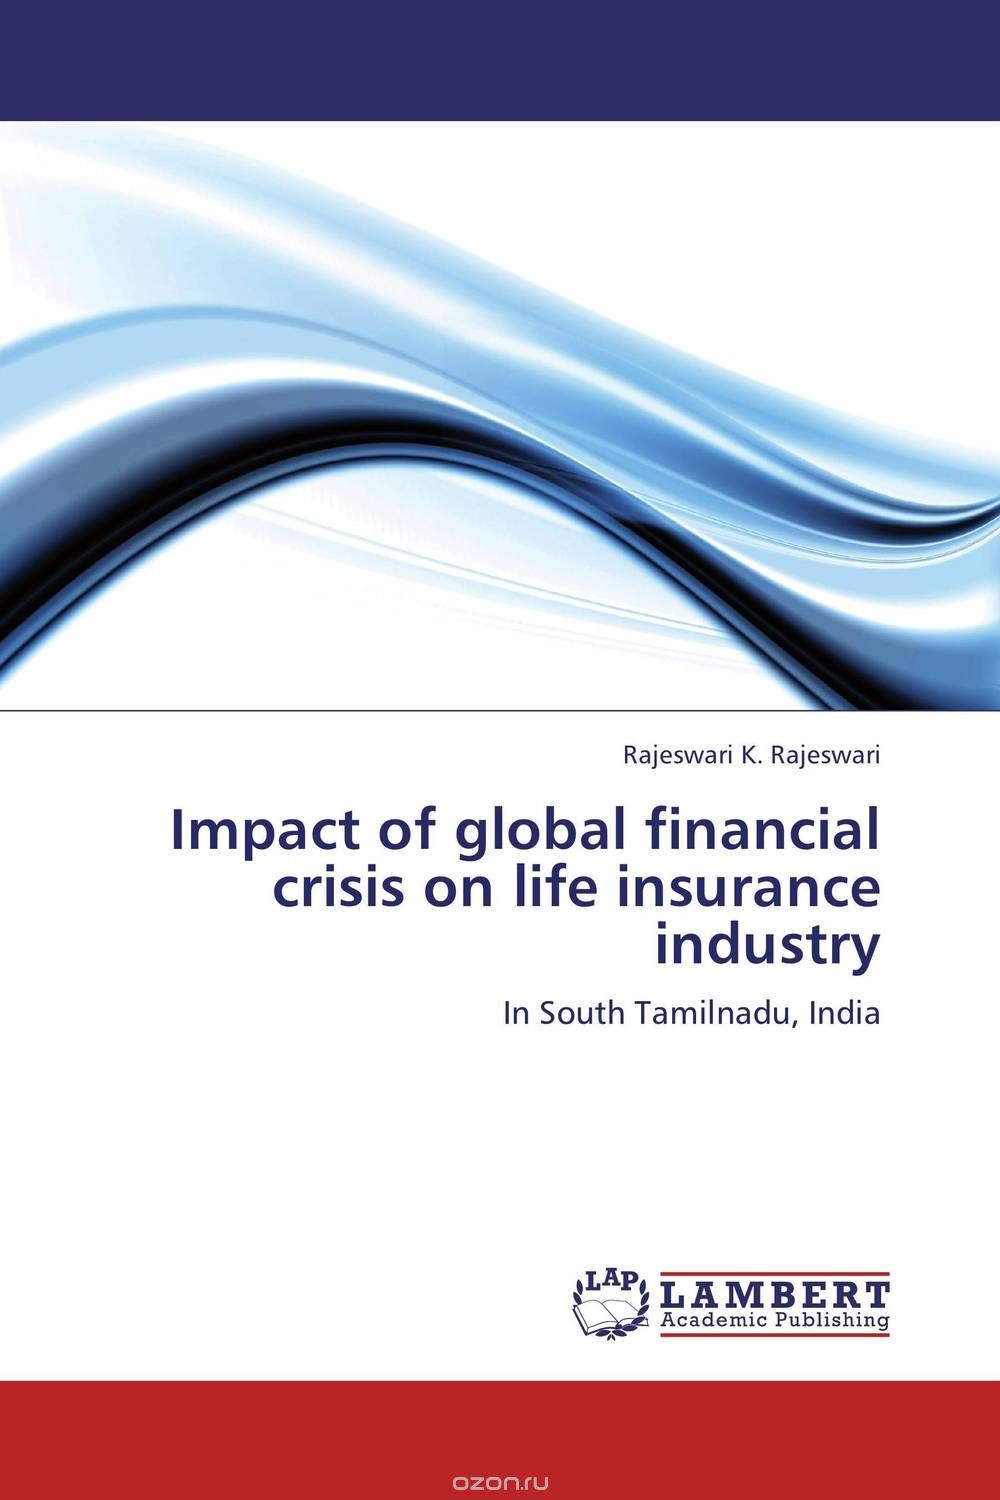 Скачать книгу "Impact of global financial crisis on life insurance industry"